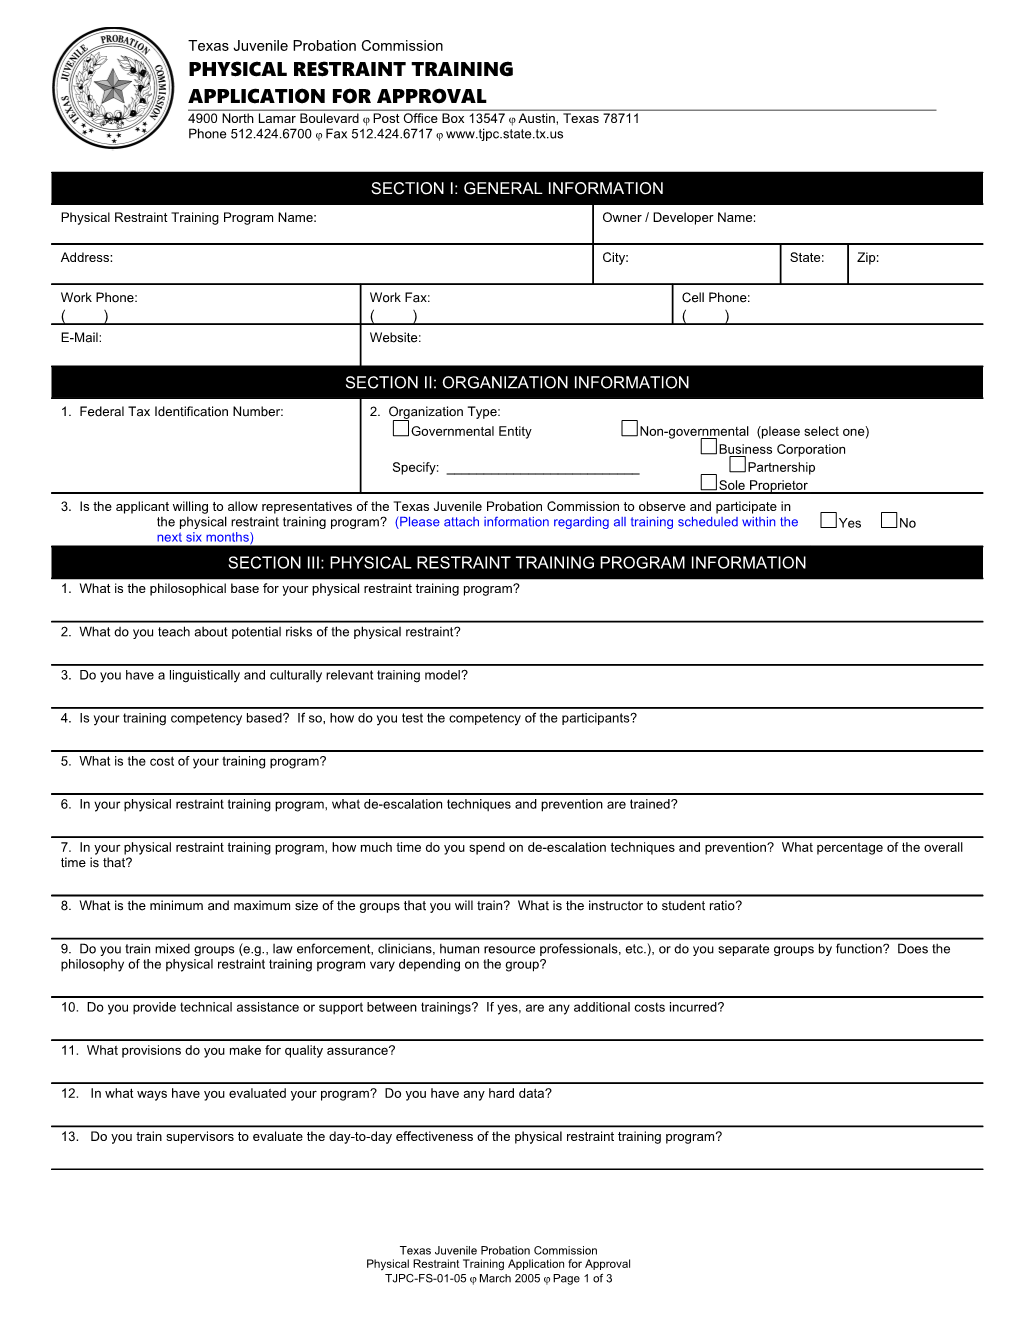 TJPC-FS-01-05 Physical Restraint Technique (PRT) Application for Approval